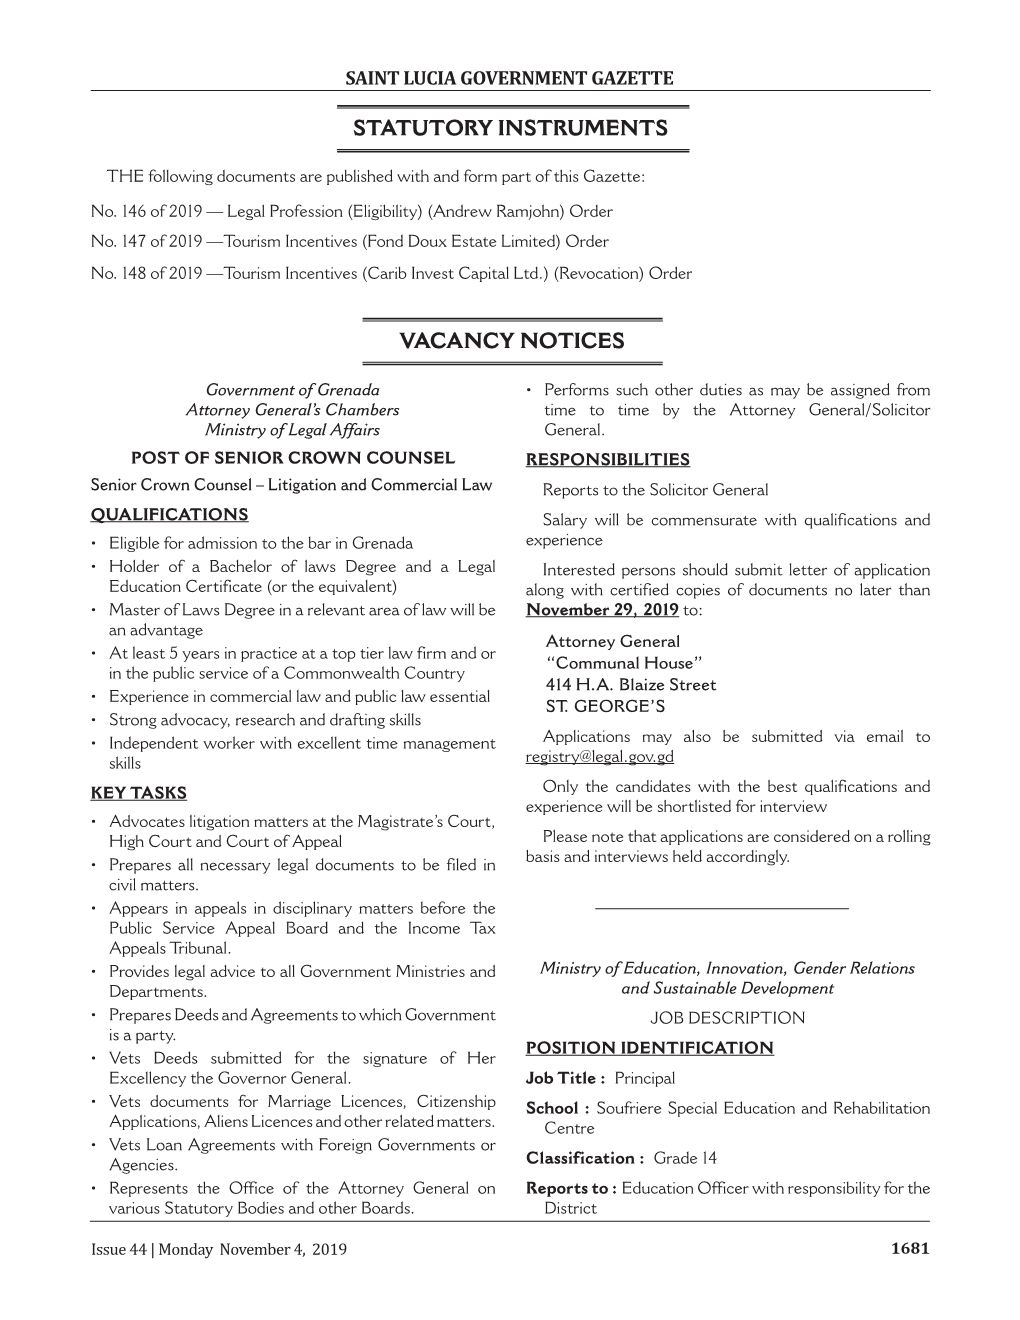 Vacancy Notices Statutory Instruments